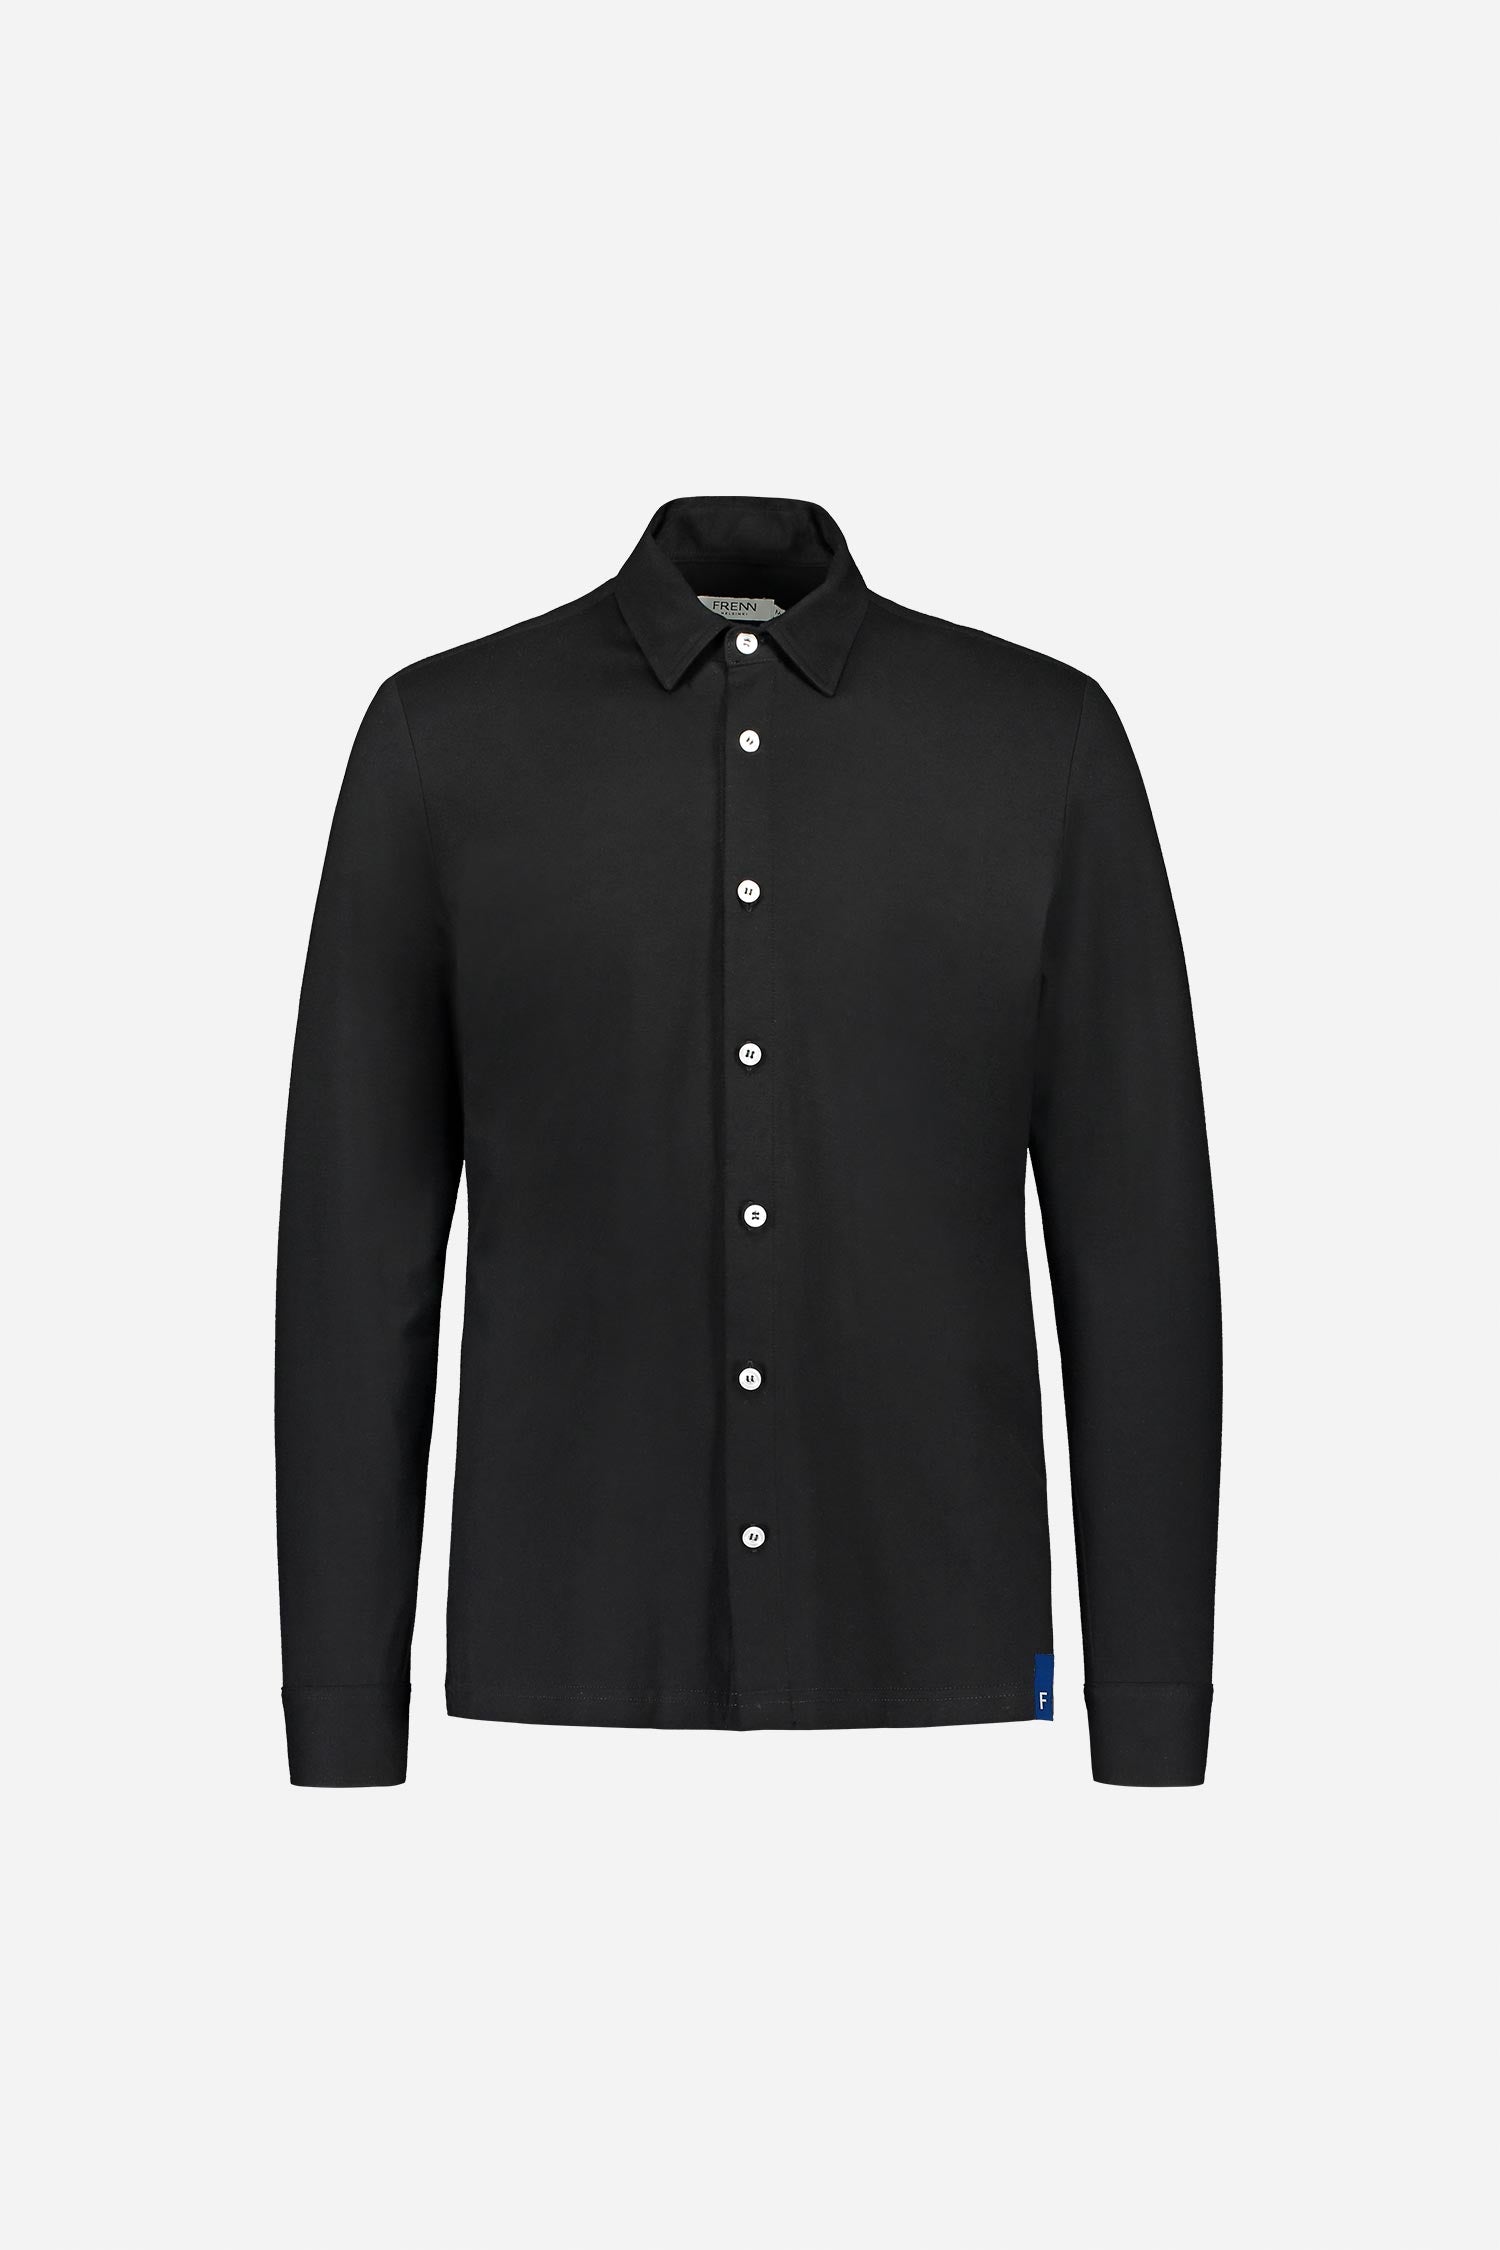 Frenn Hemmo sustainable premium quality bamboo jersey shirt black